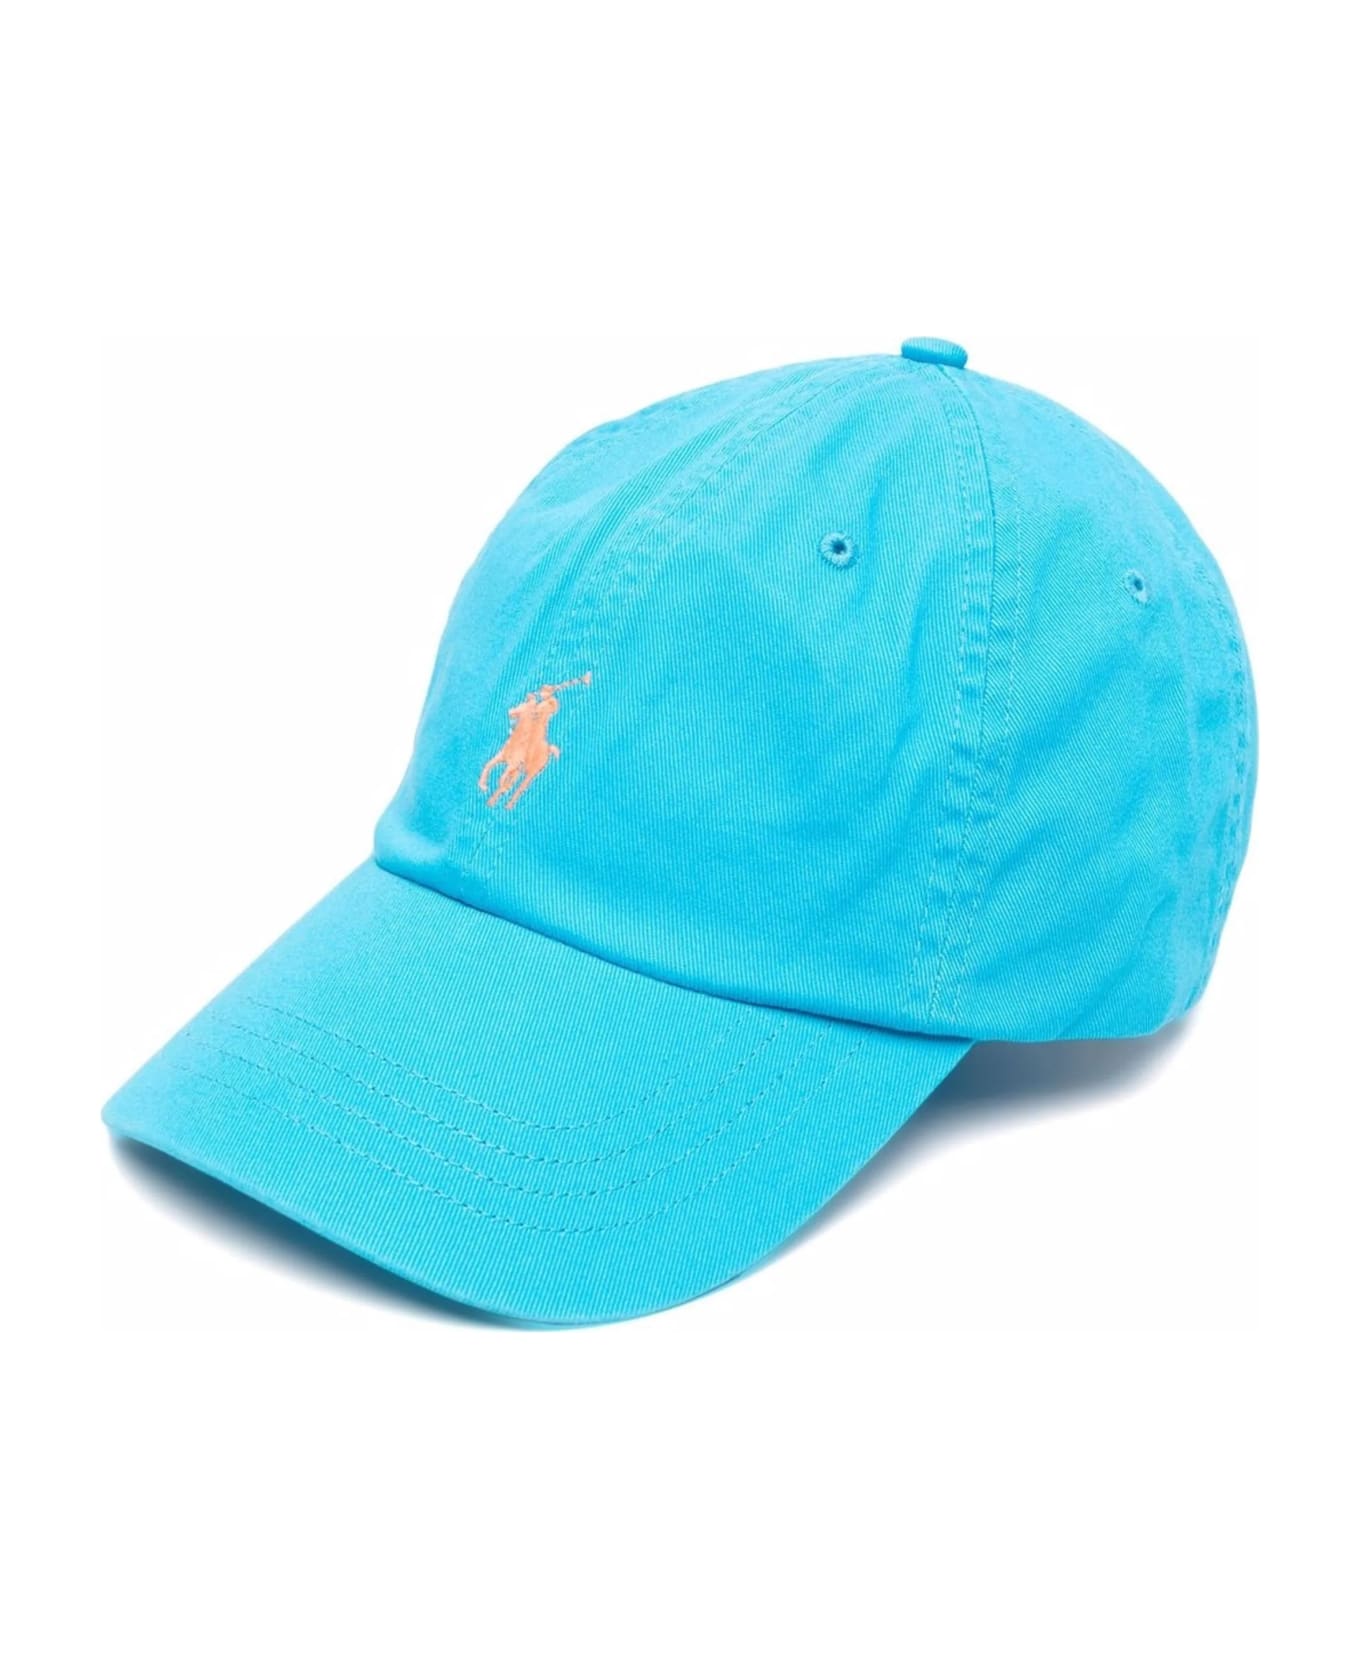 Ralph Lauren Light Blue Baseball Hat With Contrasting Pony - Blue